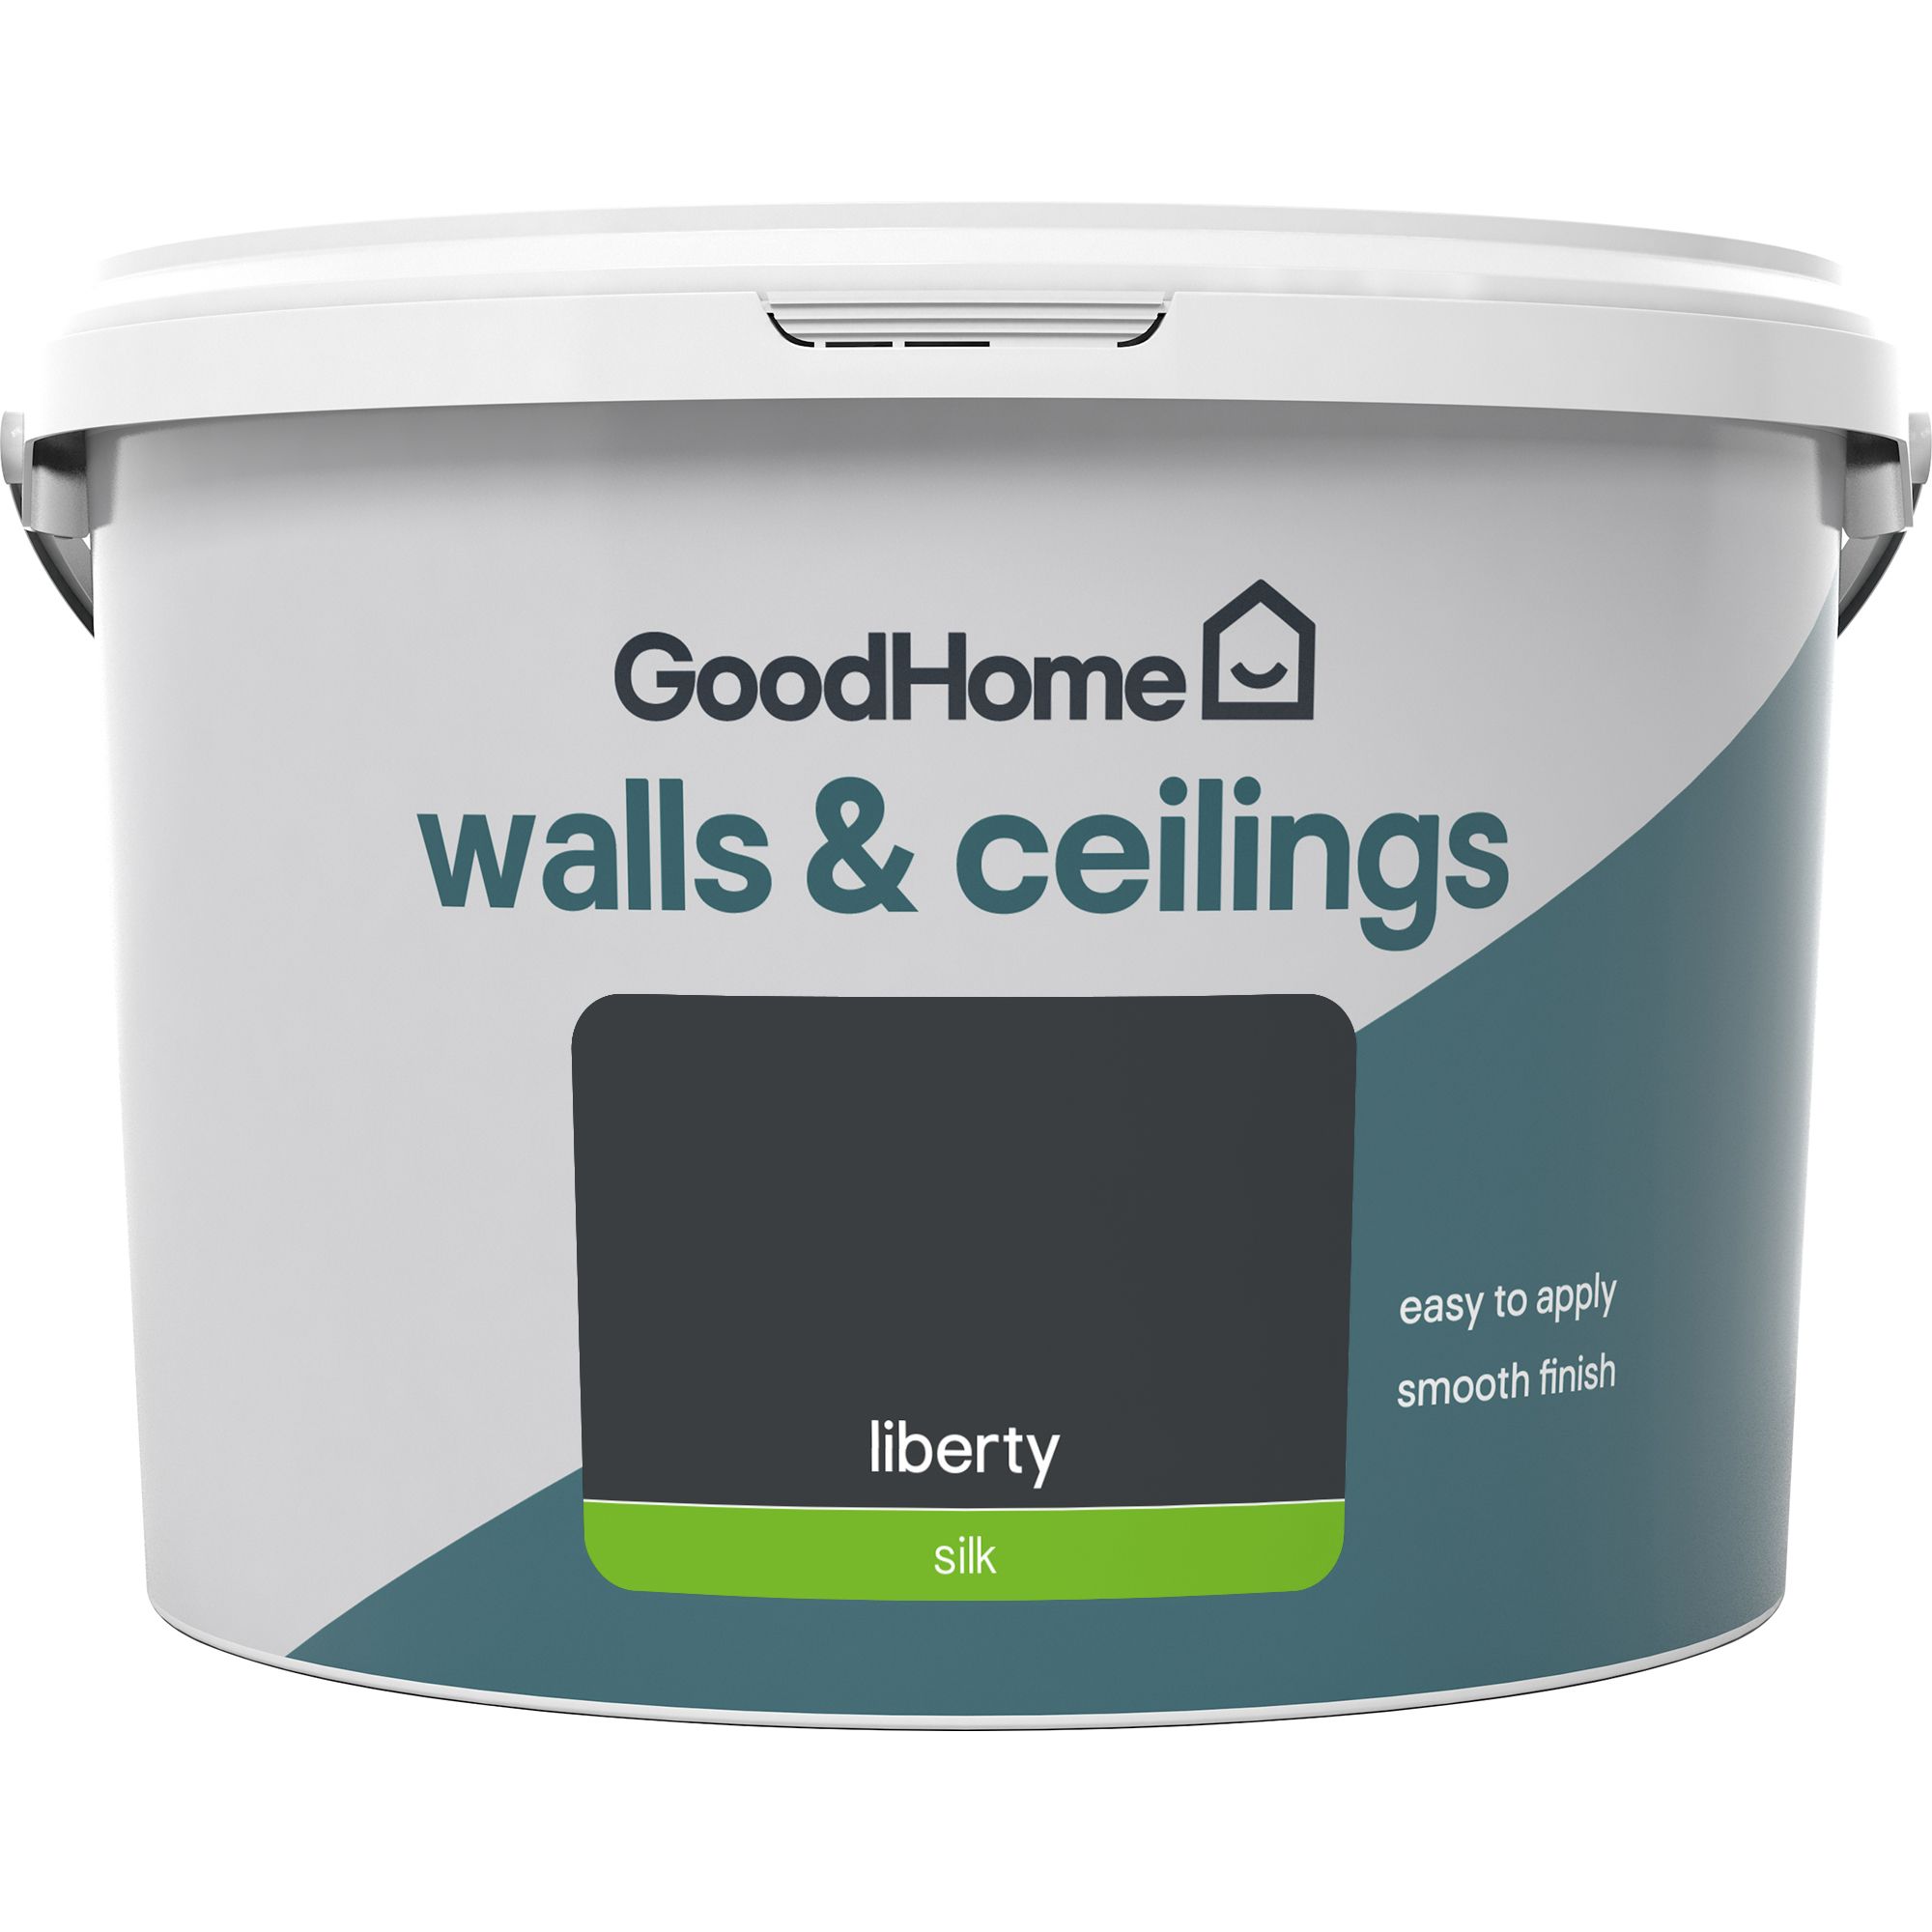 GoodHome Walls & ceilings Liberty Silk Emulsion paint, 2.5L